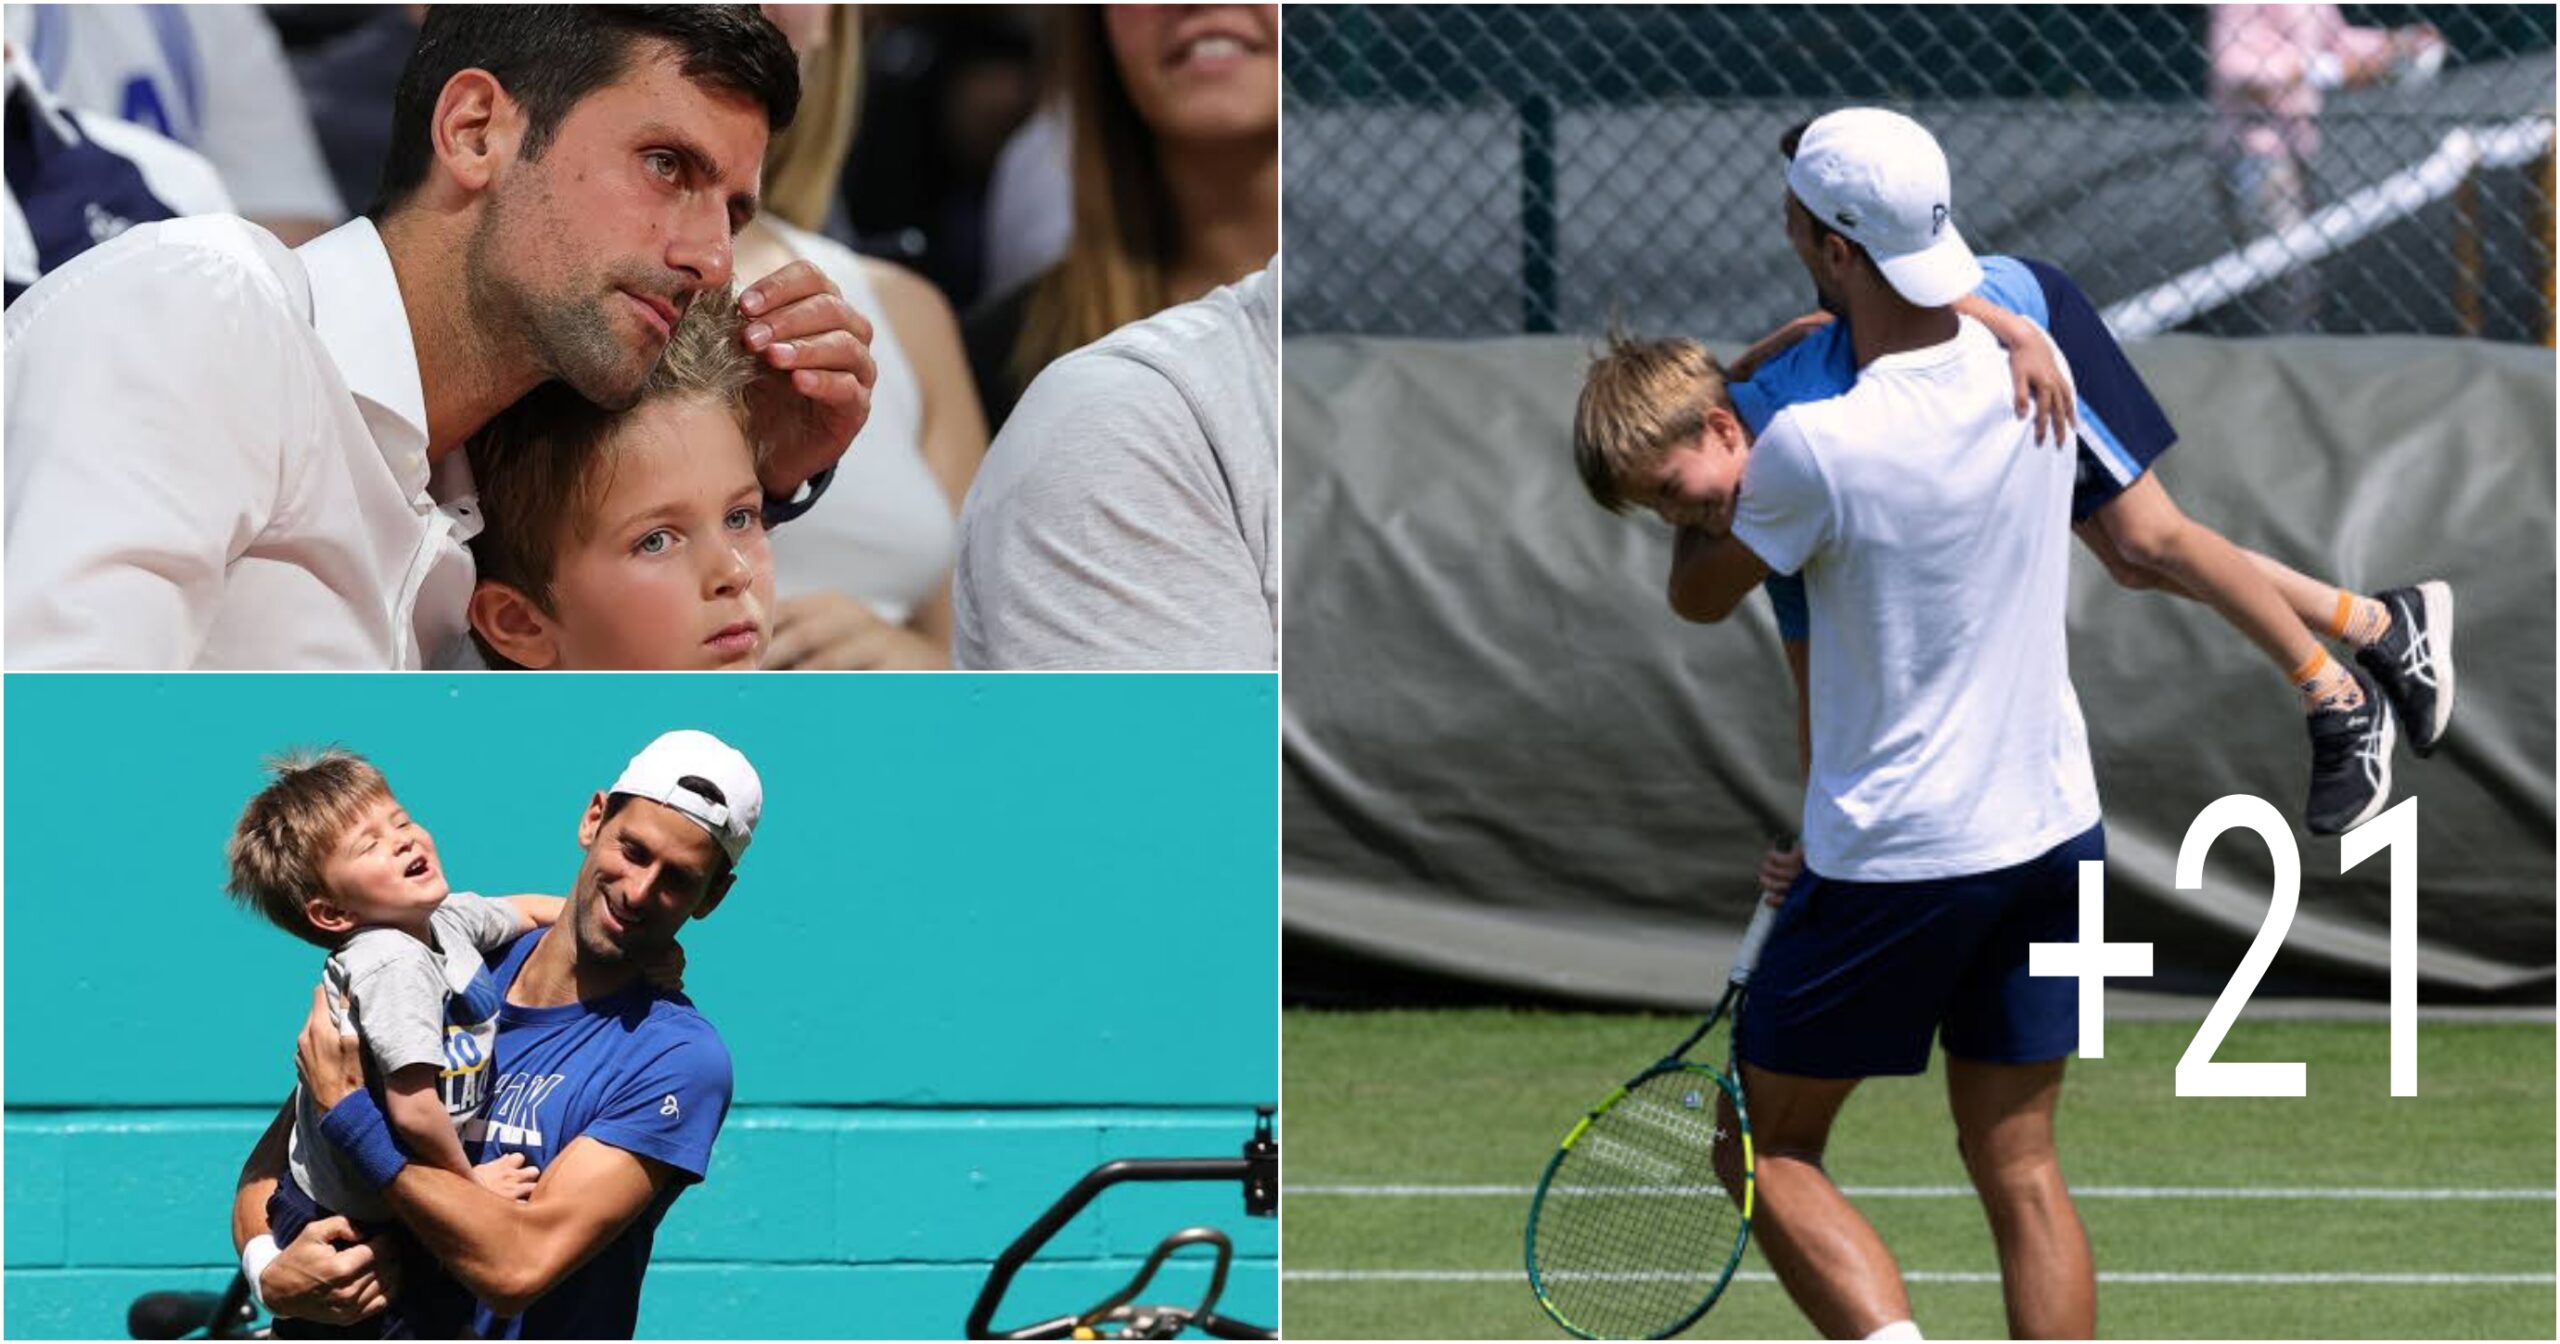 [PHOTOS] Adorable Photos of Novak Djokovic and his Son Stefan Djokovic